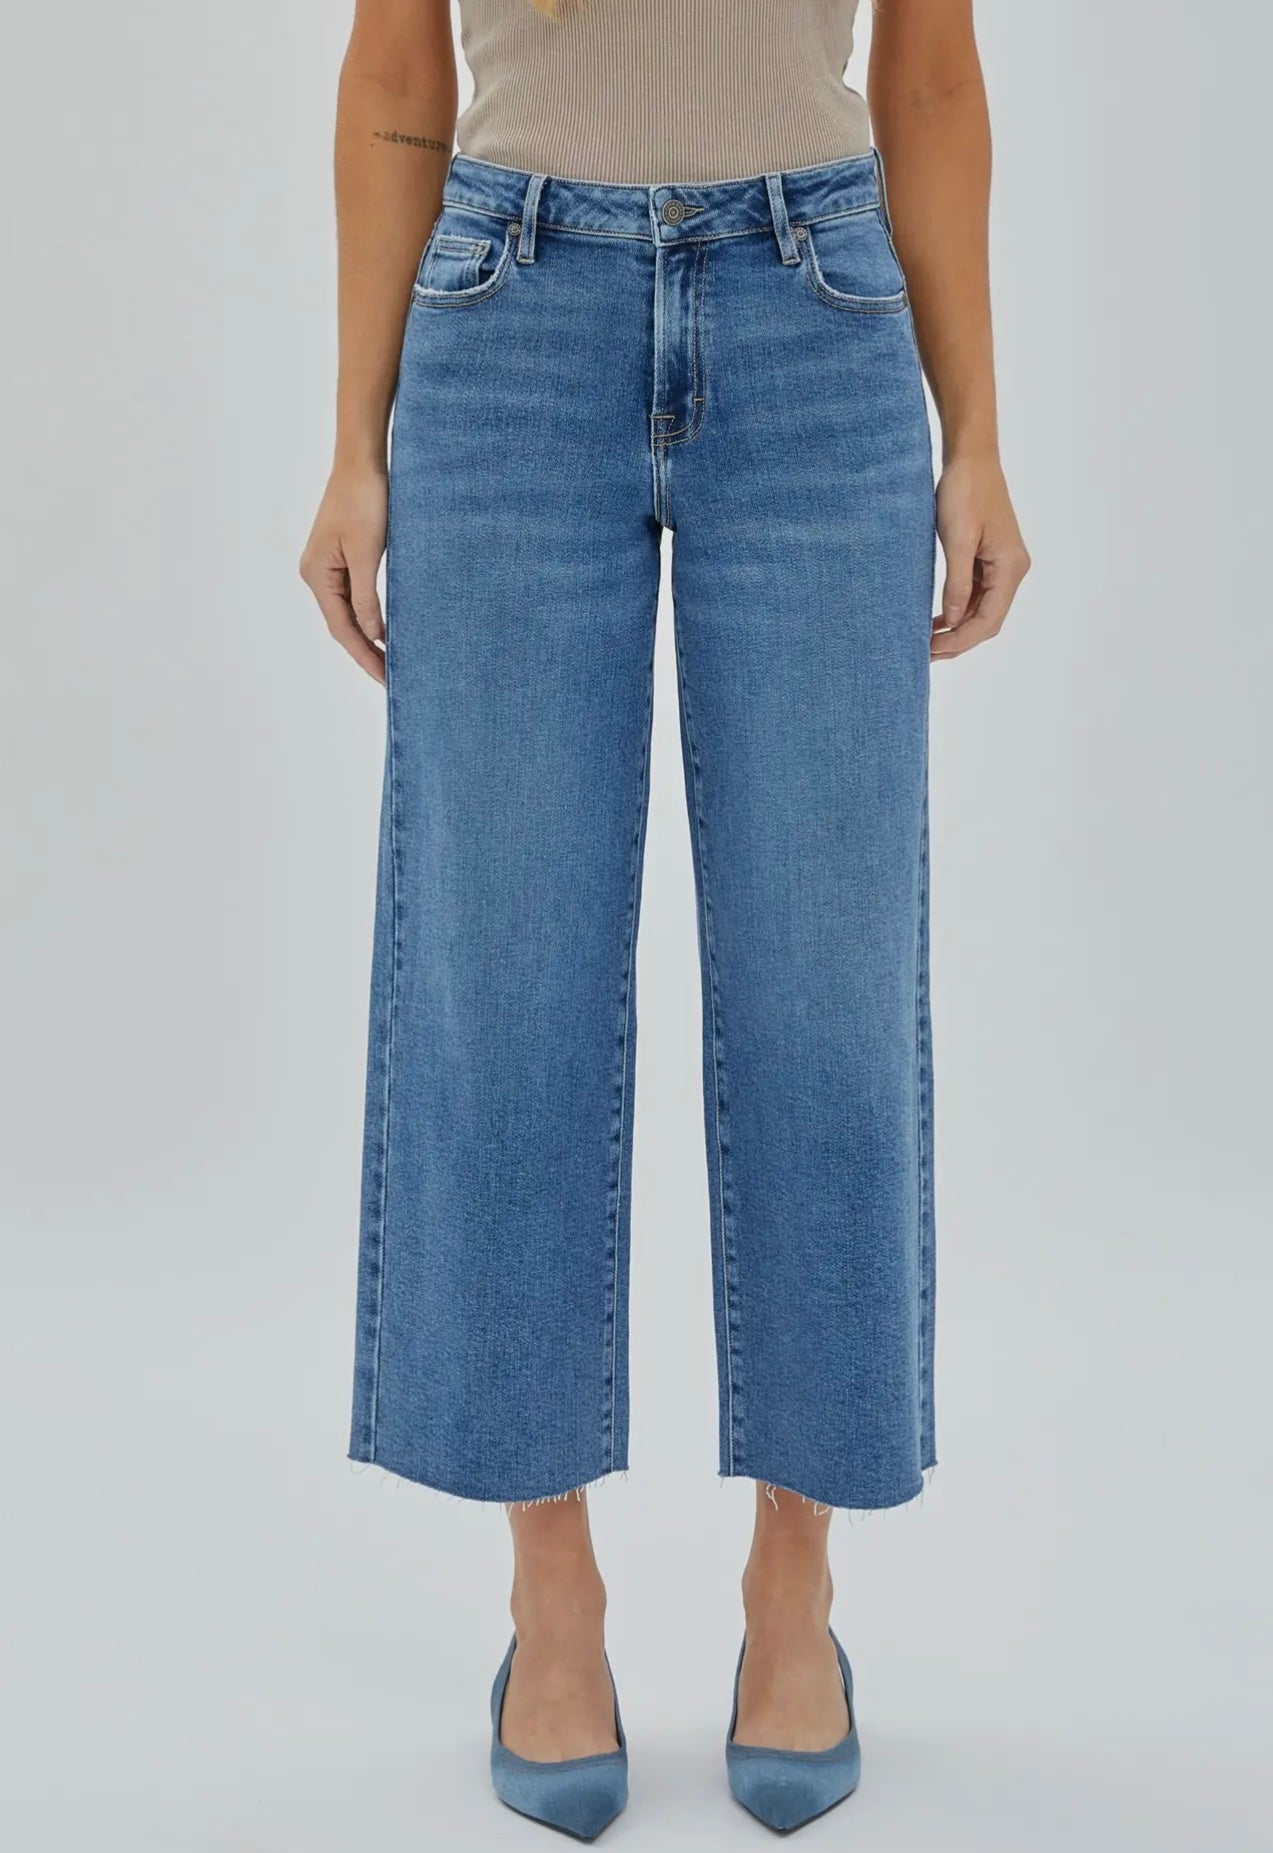 Denim & Jeans – Kate and Shop Hale